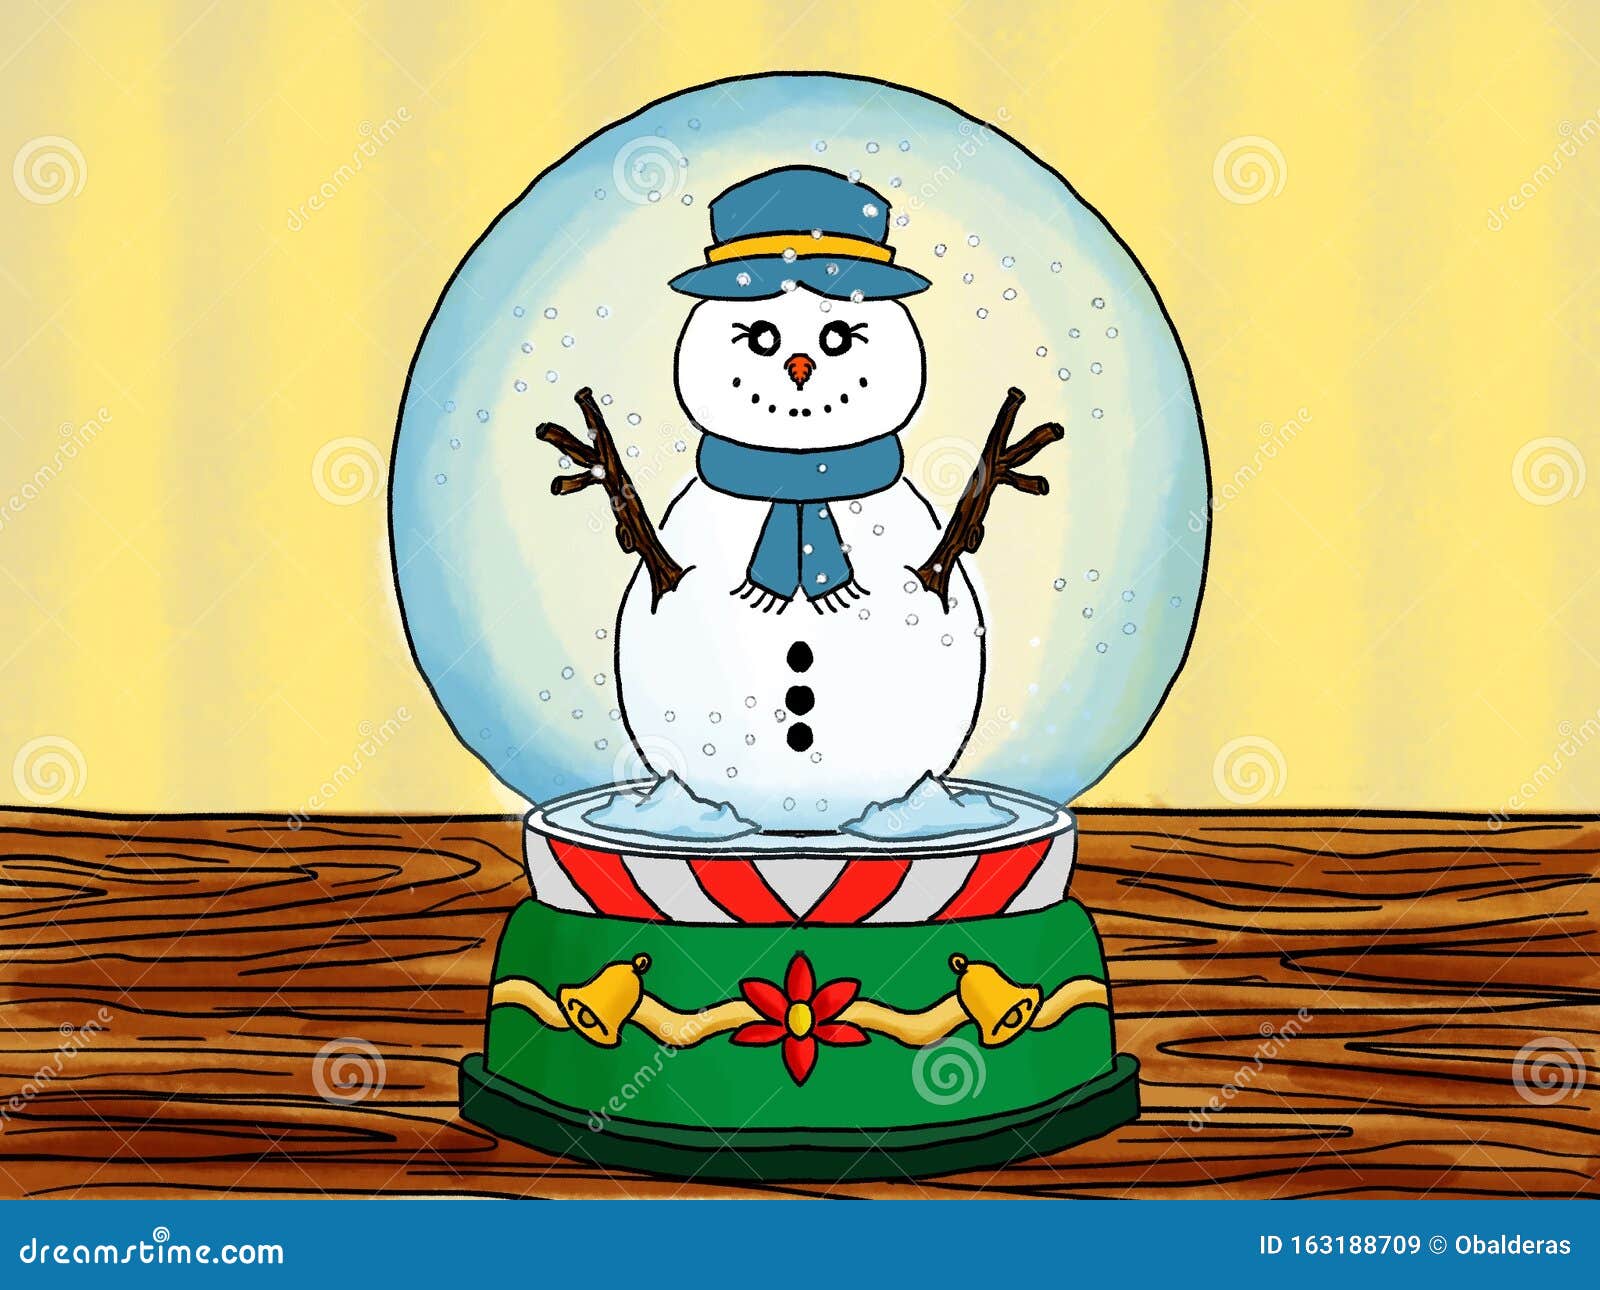 snowman in a crystal ball - muÃÂ±eco de nieve en una  bola de cristal